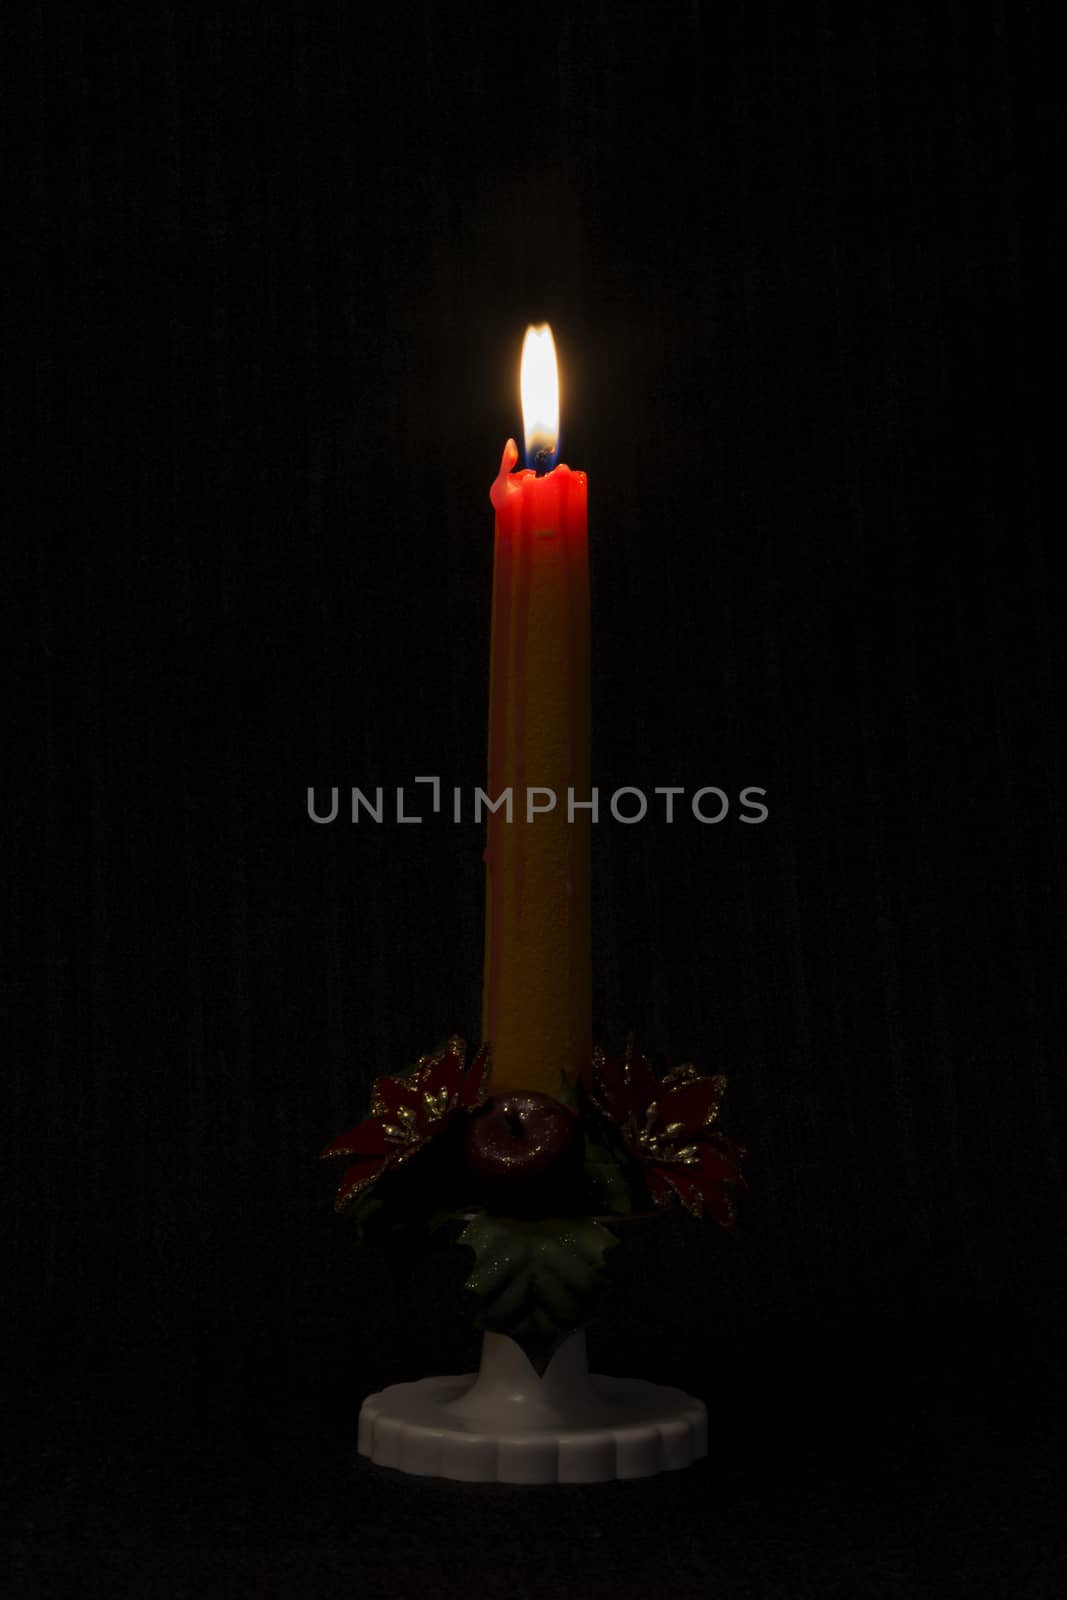 Lit candle on black background